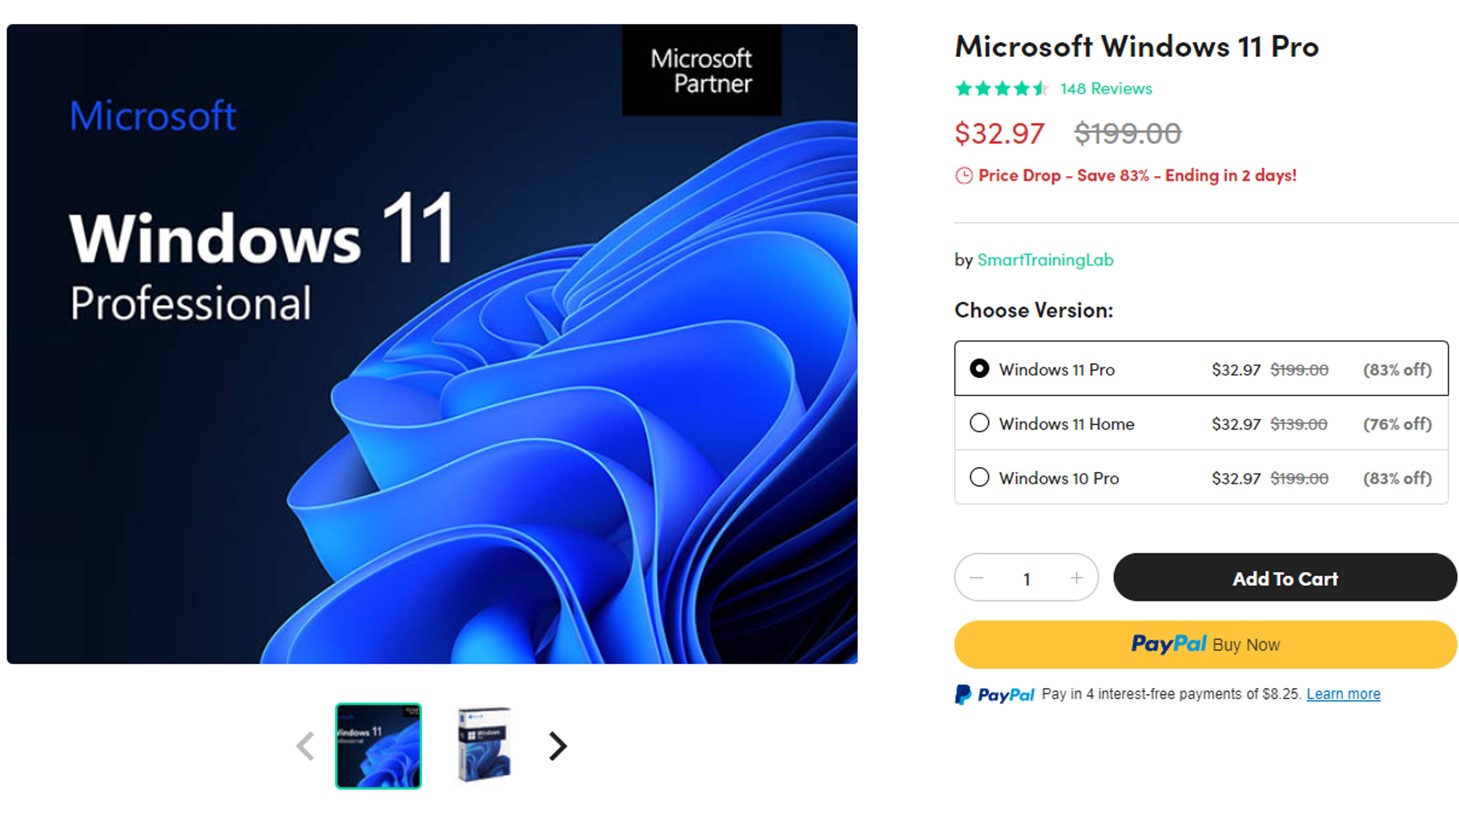 Microsoft Windows 11 Pro Deal